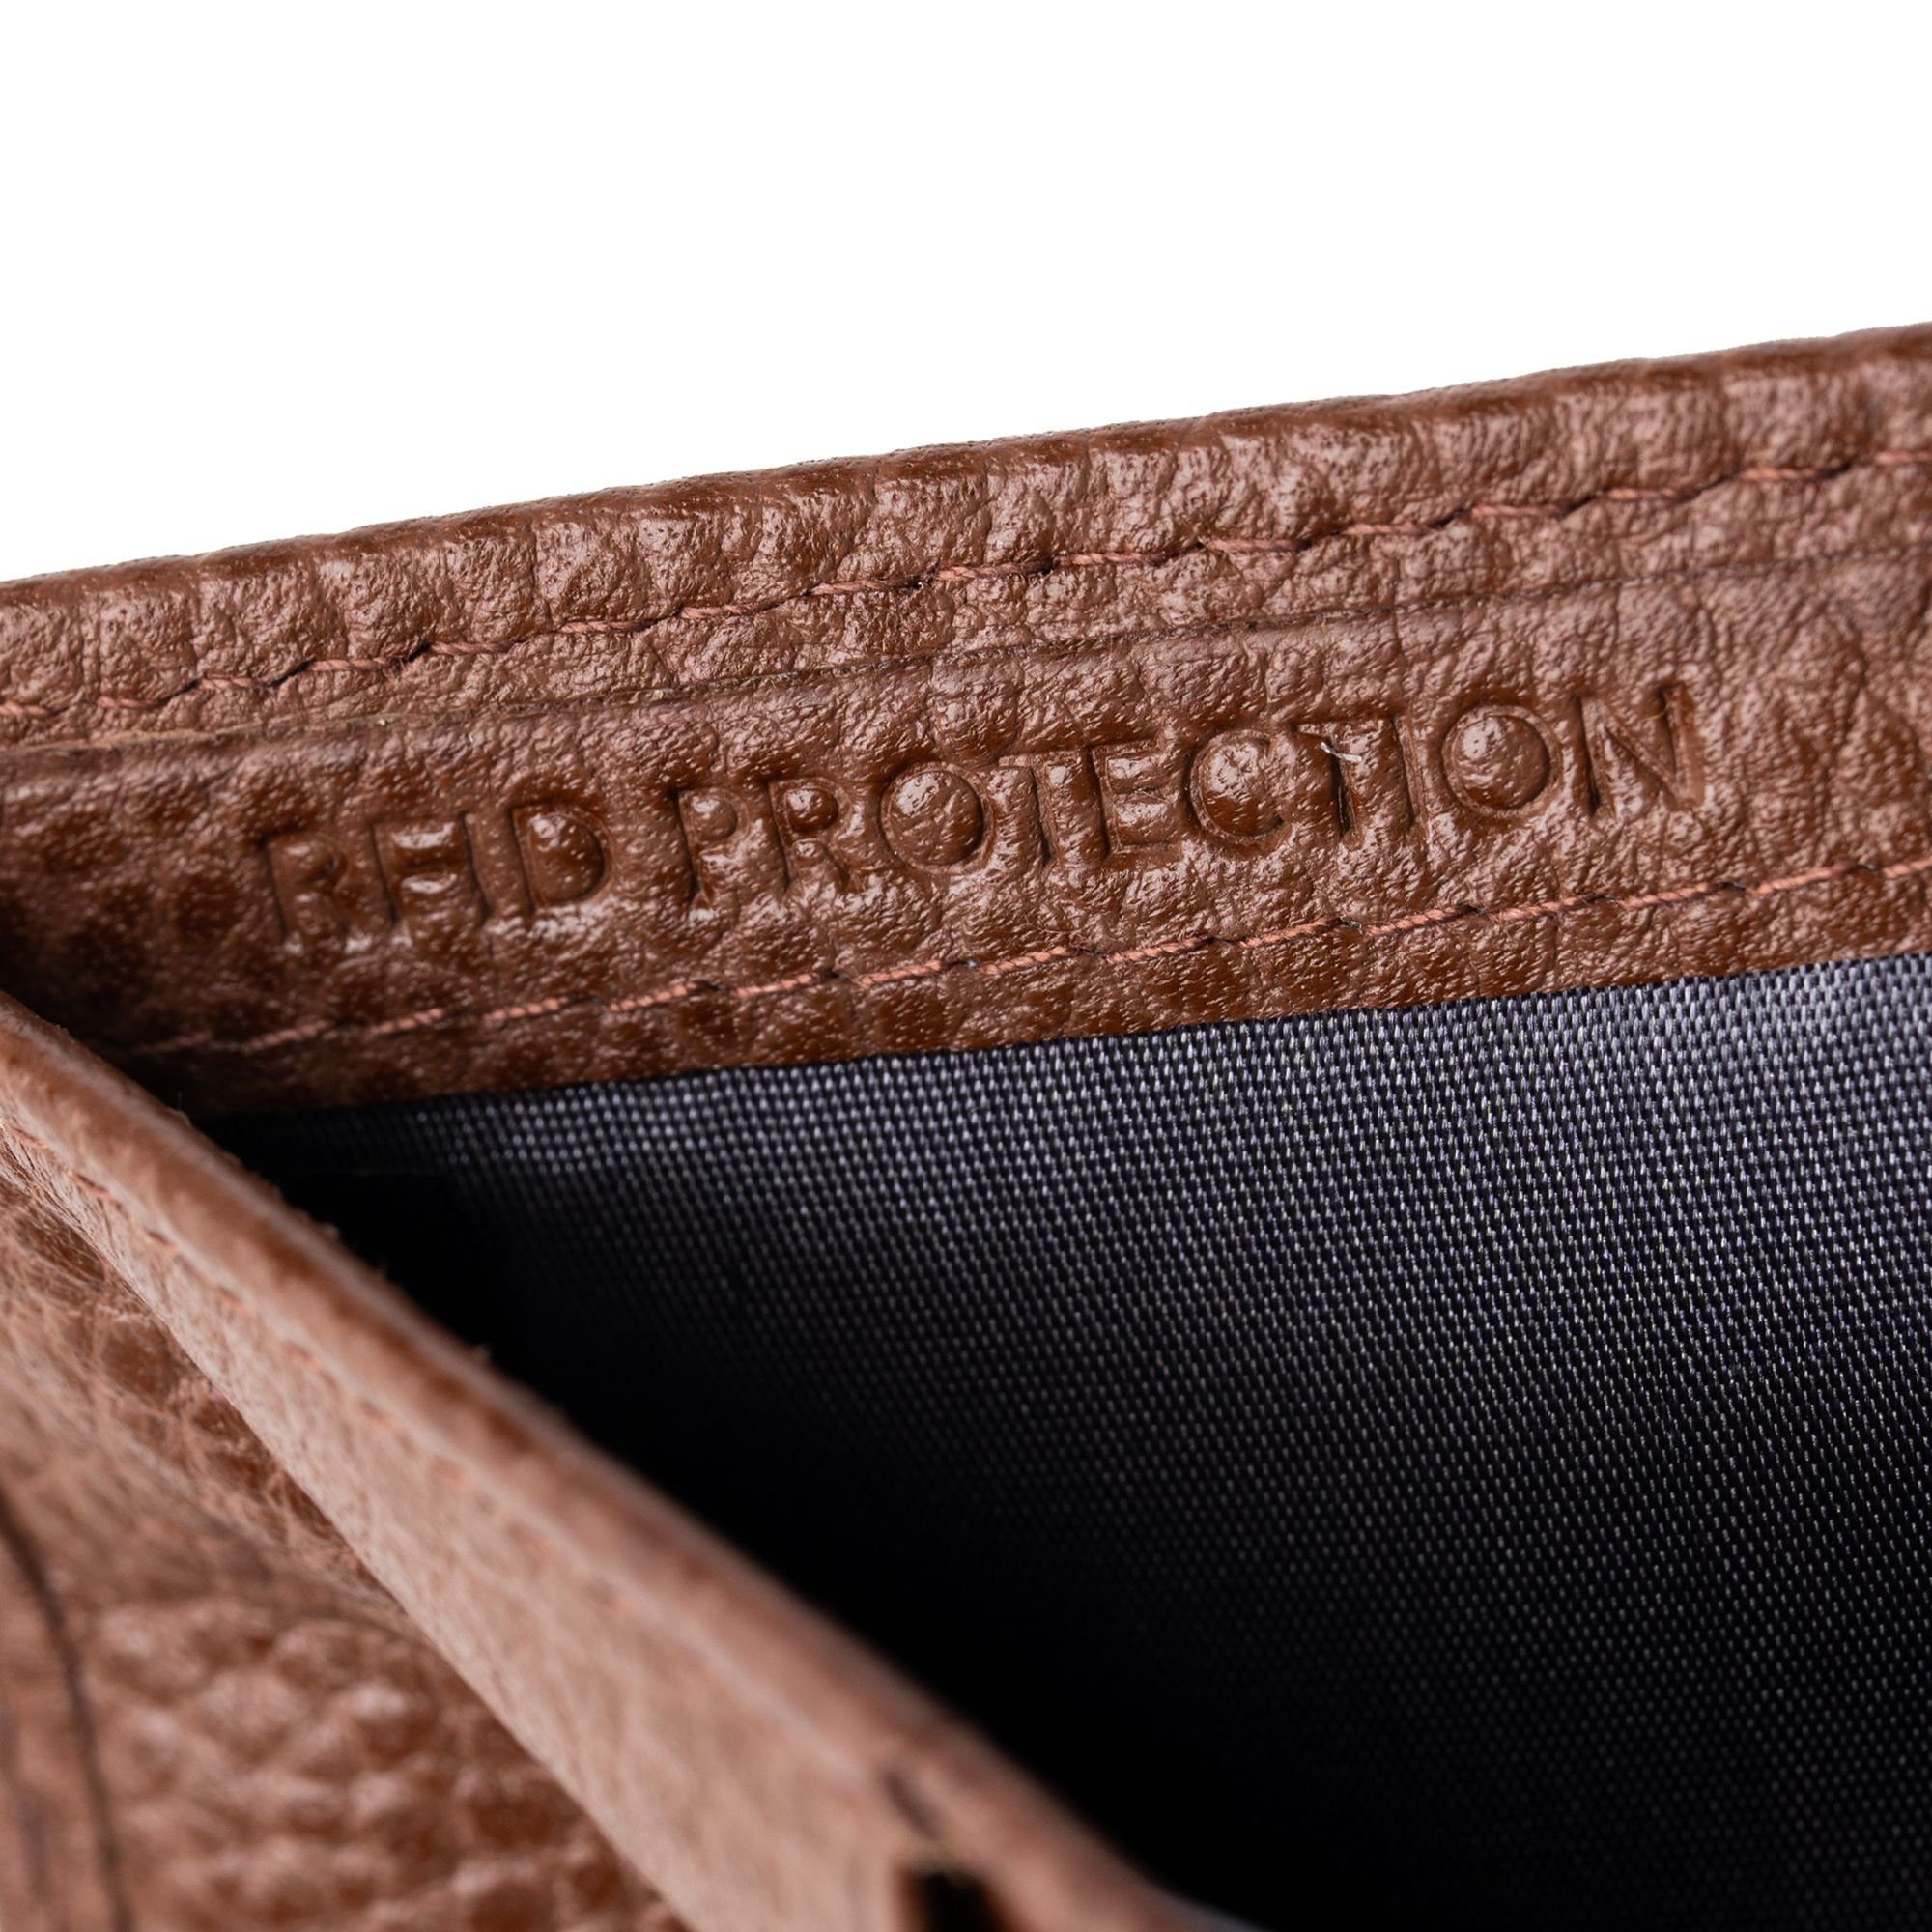 Geldbörse Leather, brown Bologna Lazarotti Leder